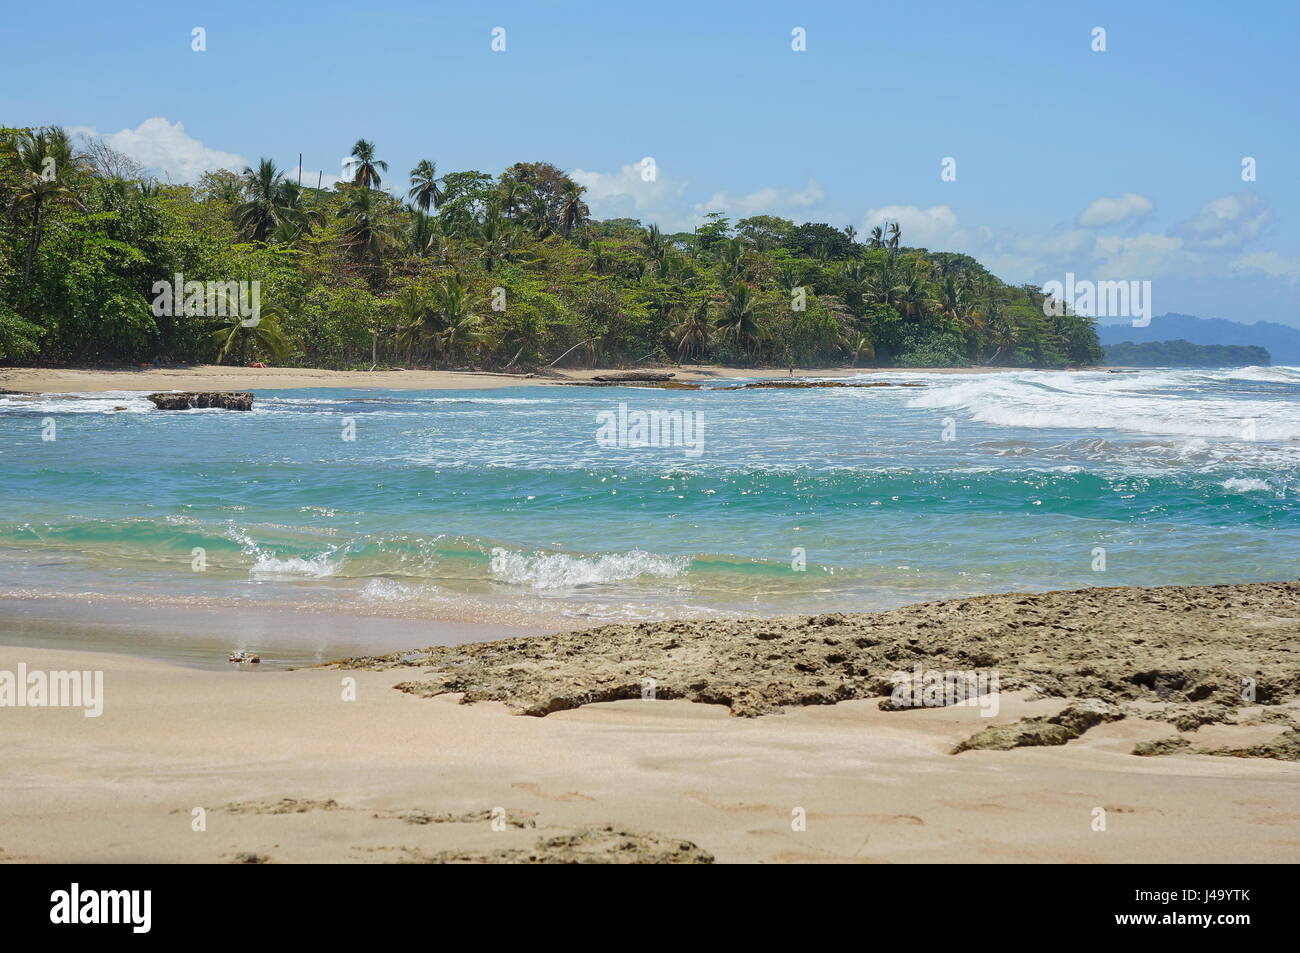 Tropical coastline on the Caribbean shore of Costa Rica, playa Chiquita, Puerto Viejo de Talamanca, Central America Stock Photo